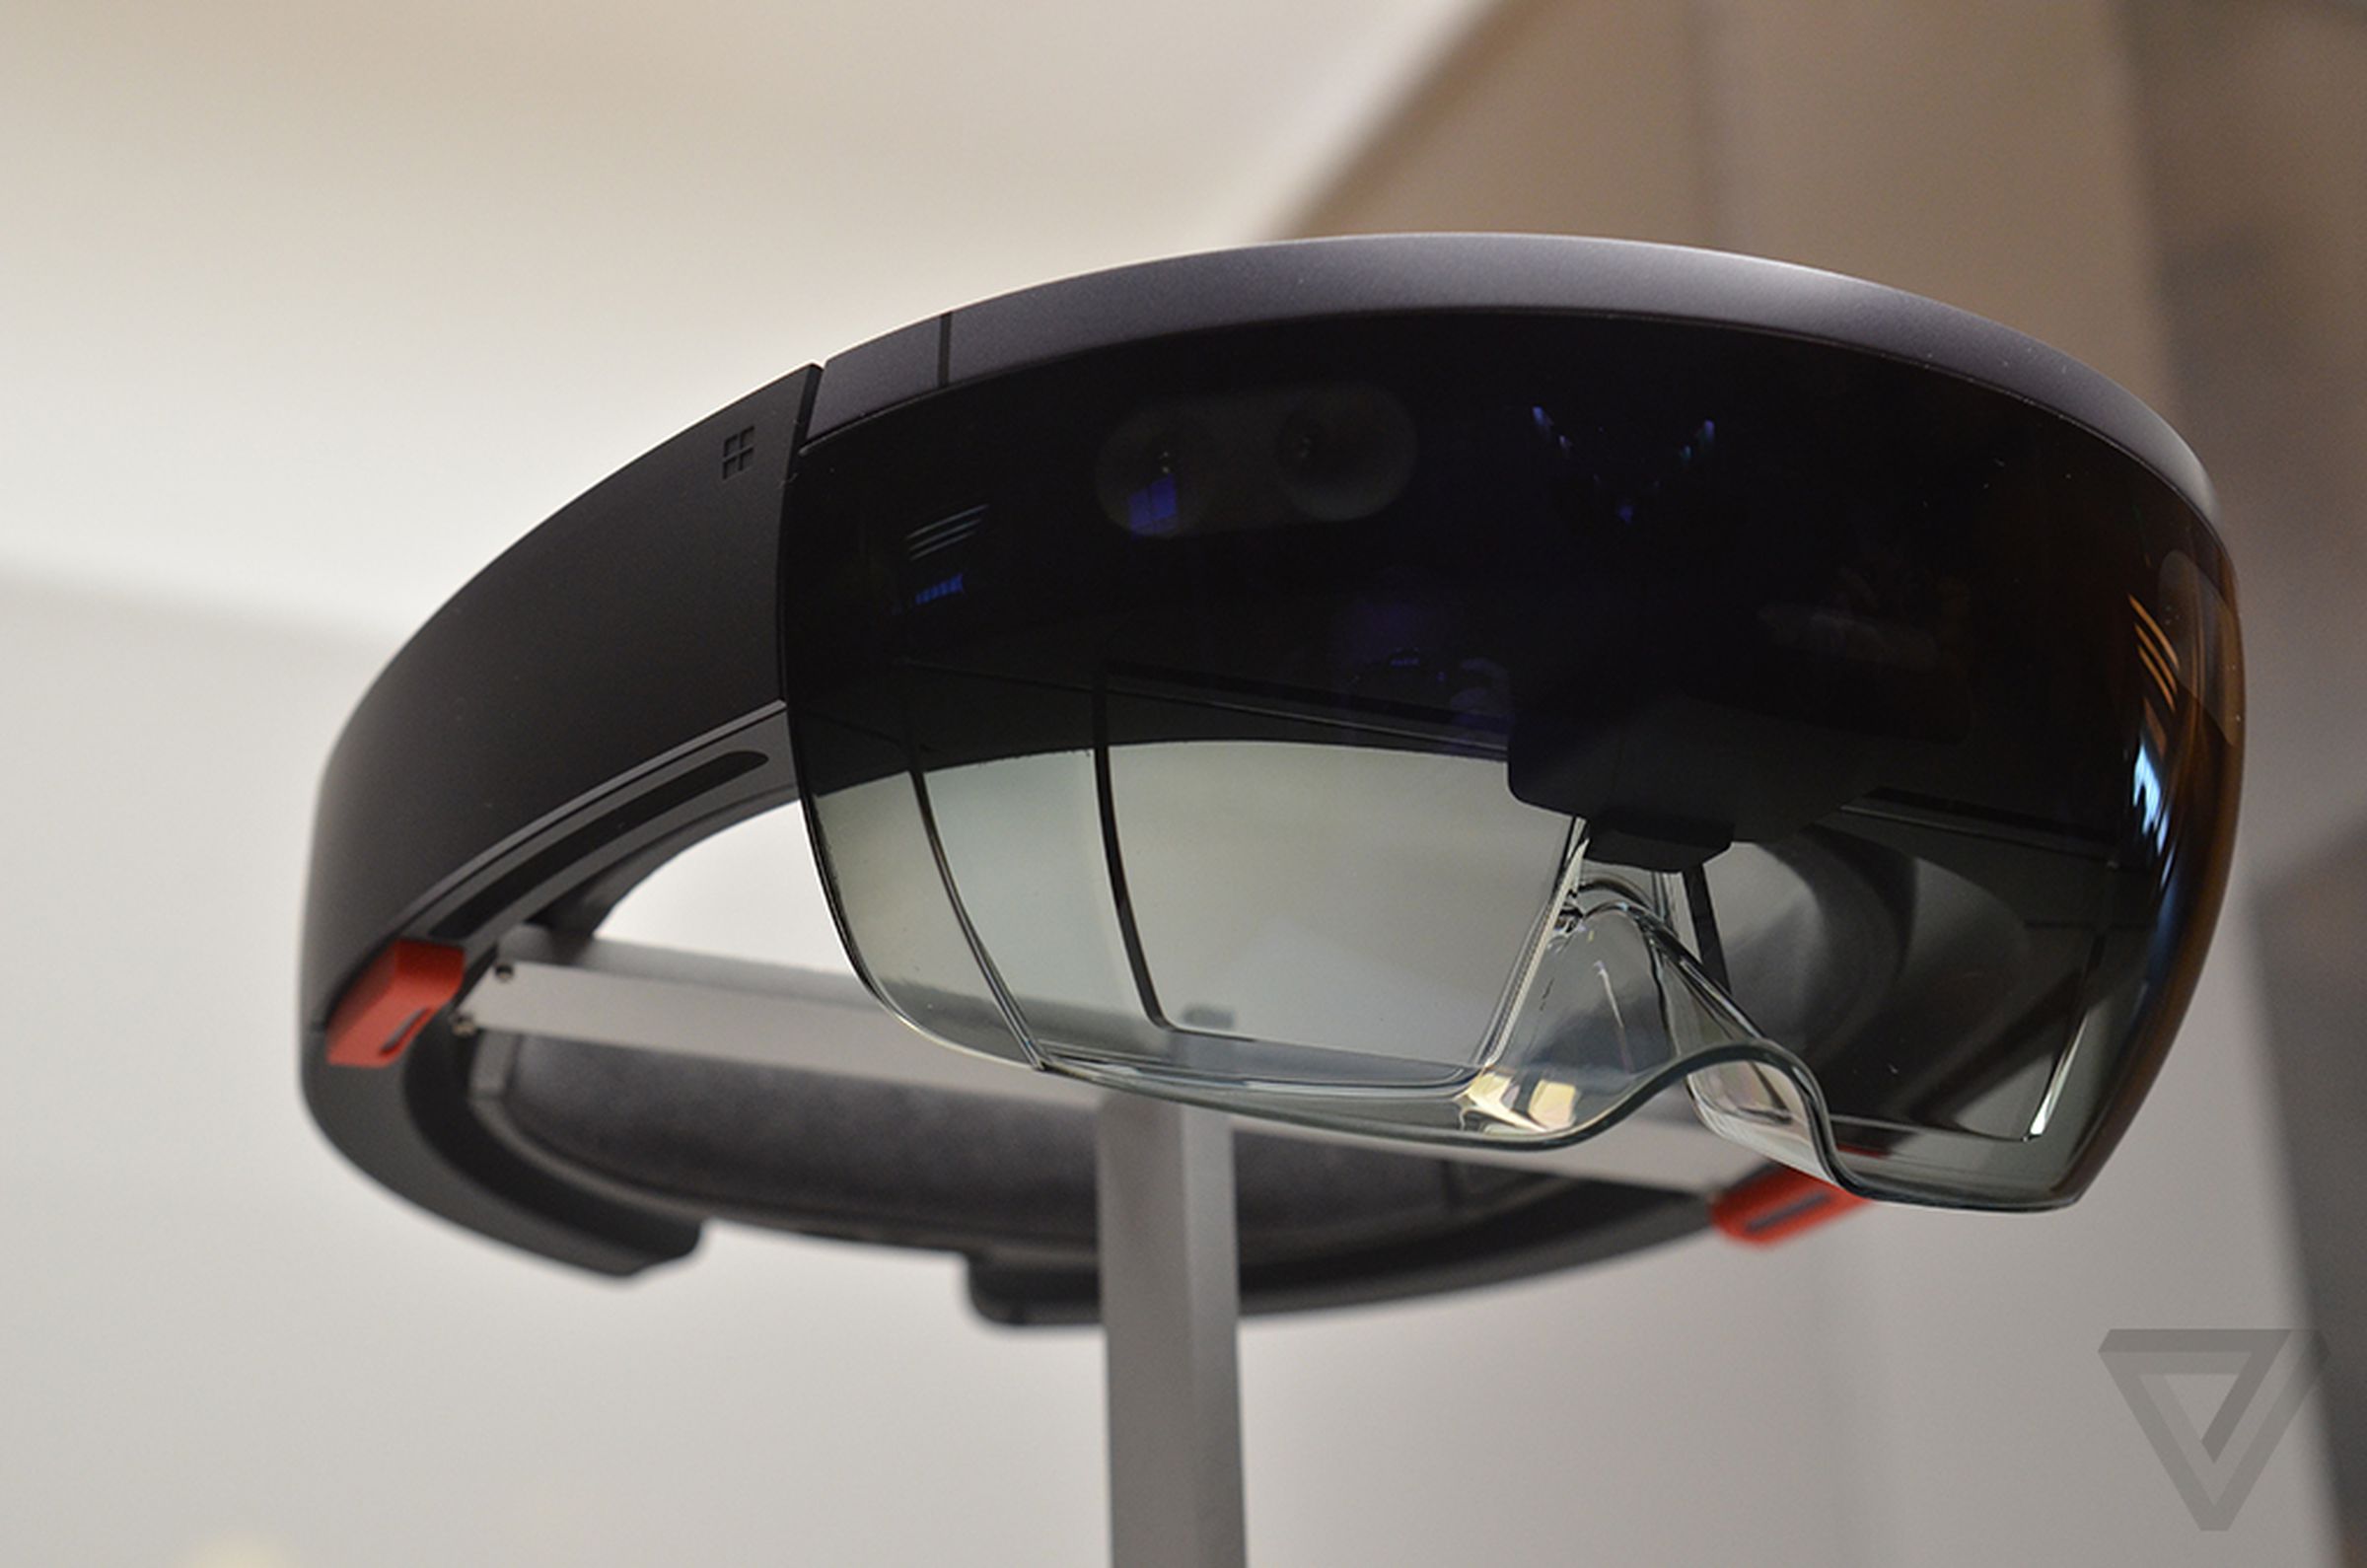 Microsoft HoloLens up close photos